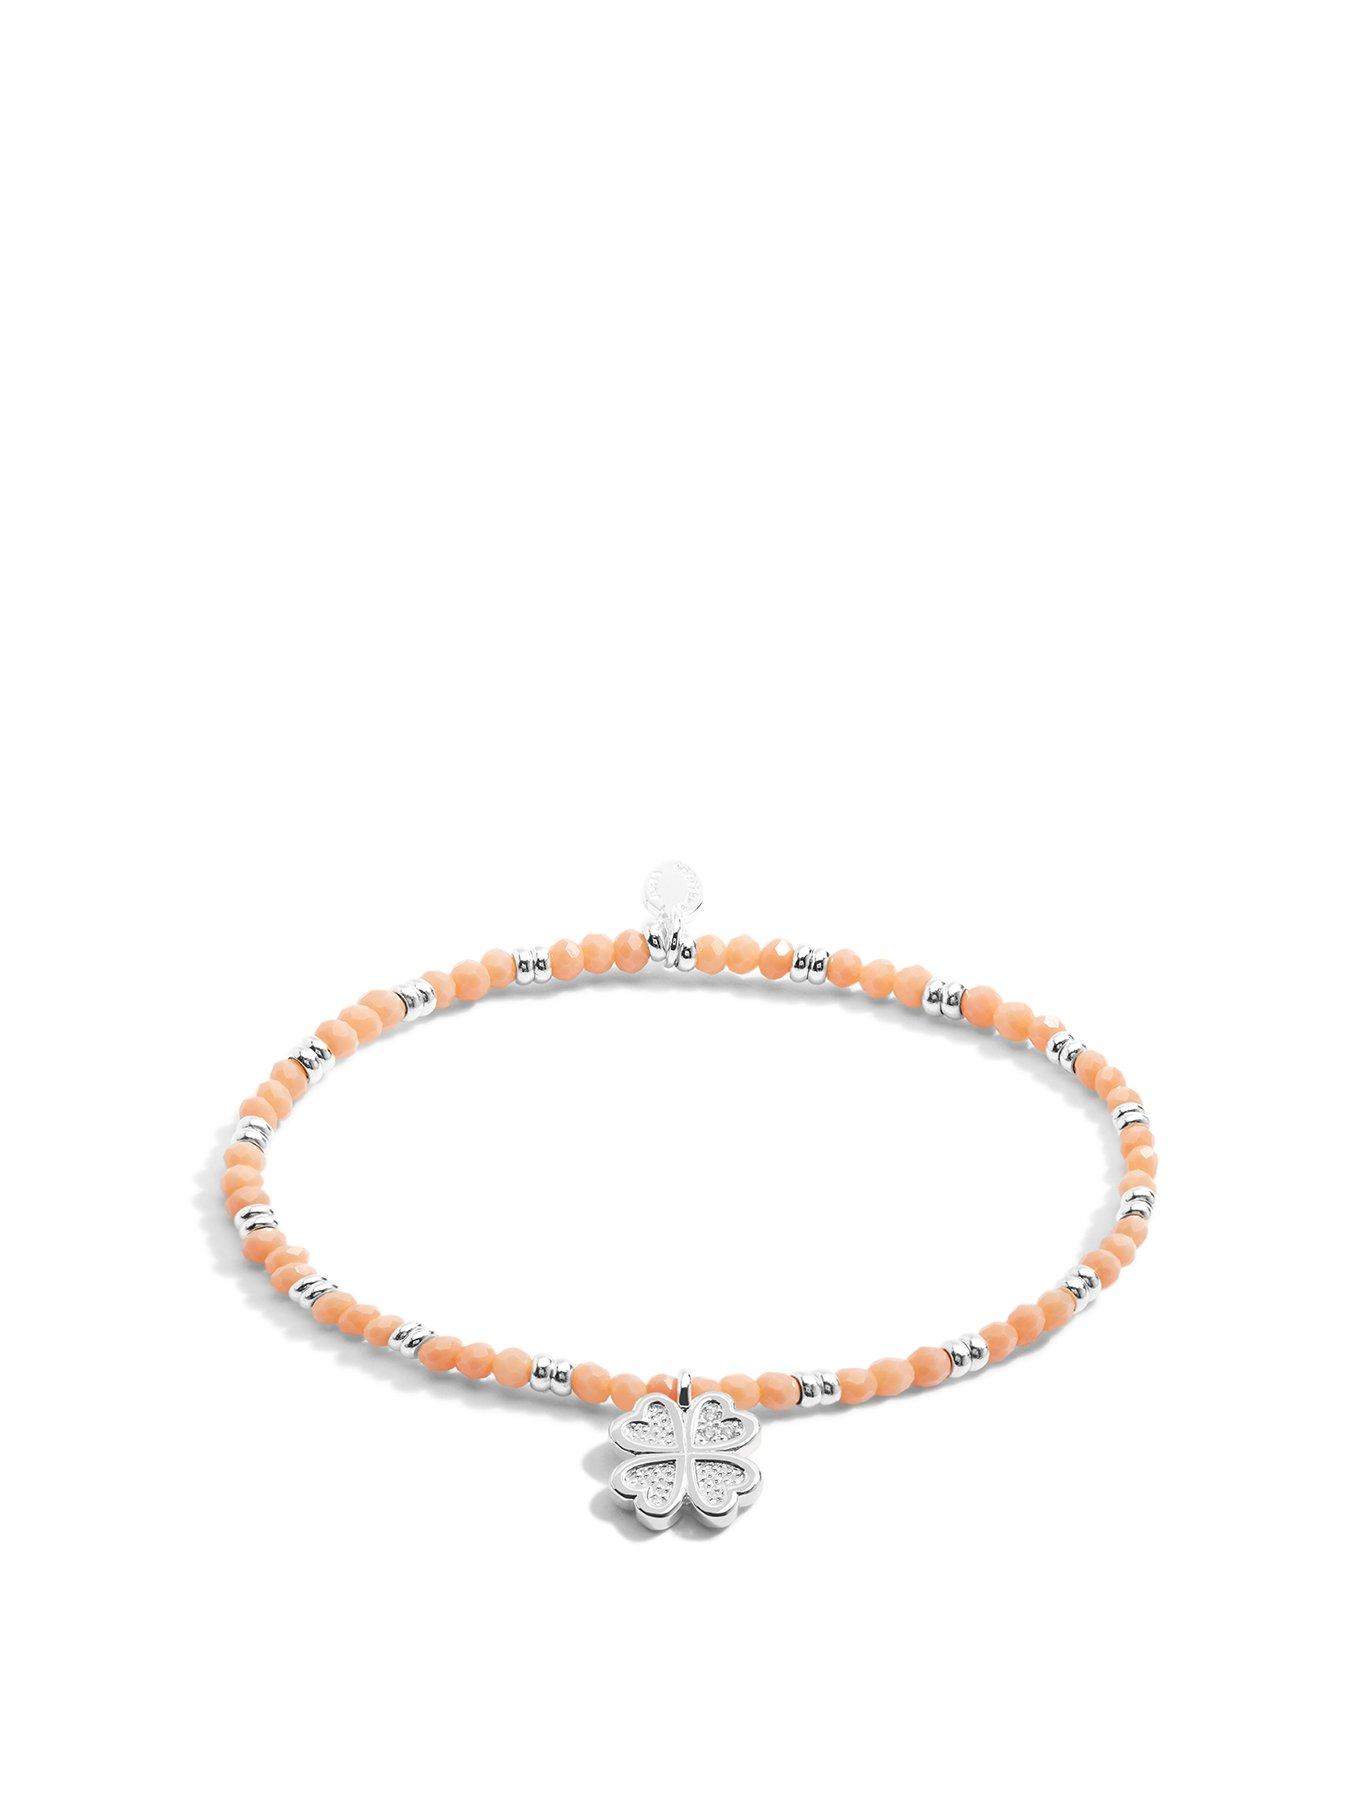 Product photograph of Joma Jewellery Boho Beads Flower Orange Amp Silver Bracelet 17 5cm Stretch from very.co.uk